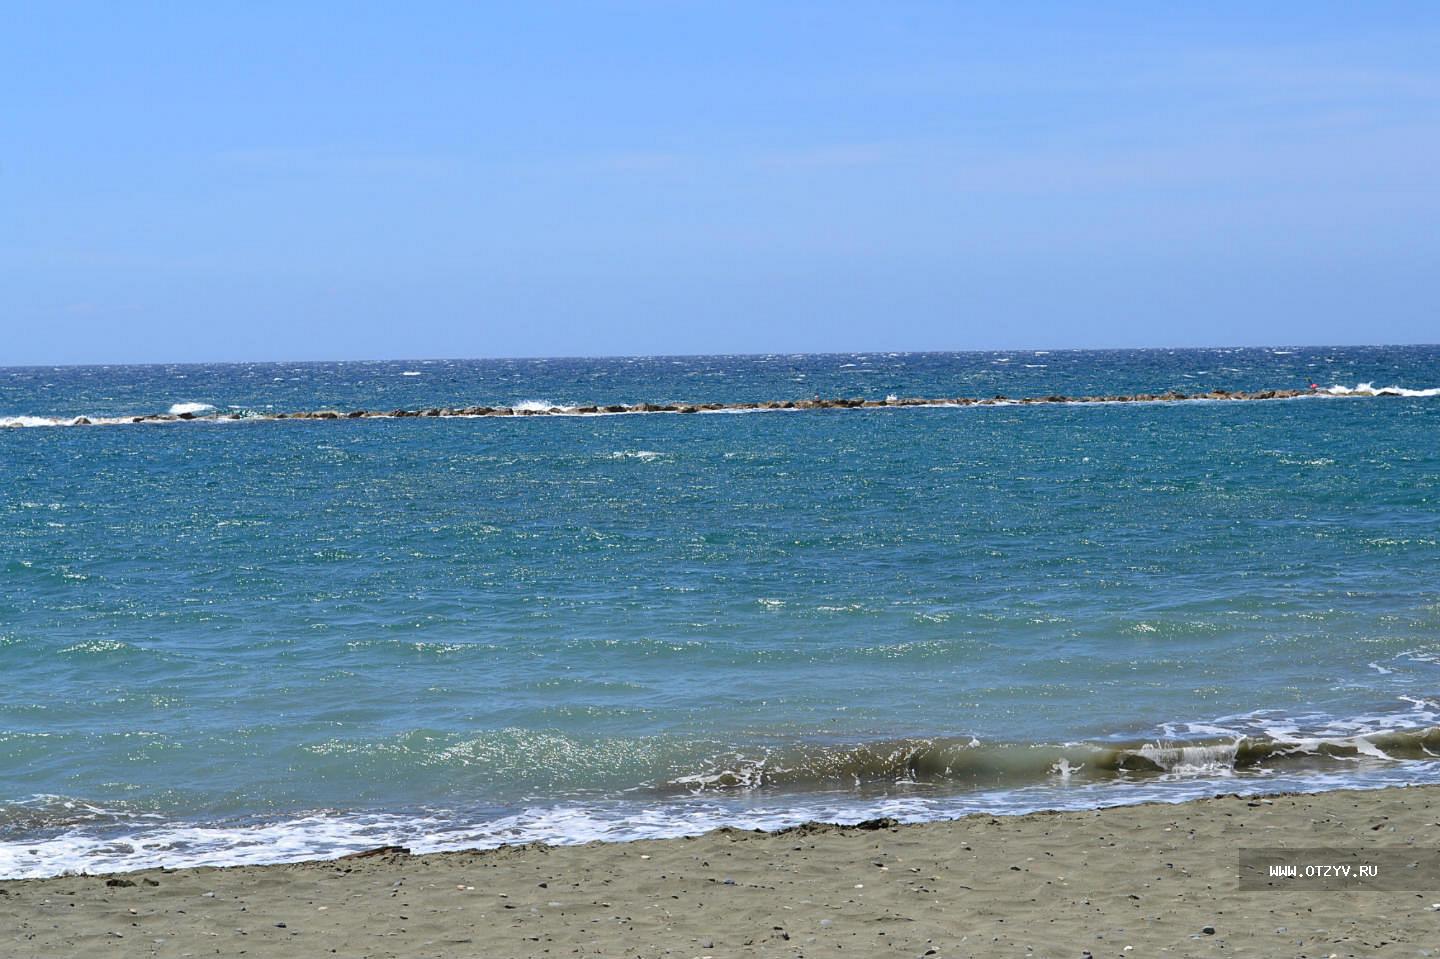 Poseidonia Beach